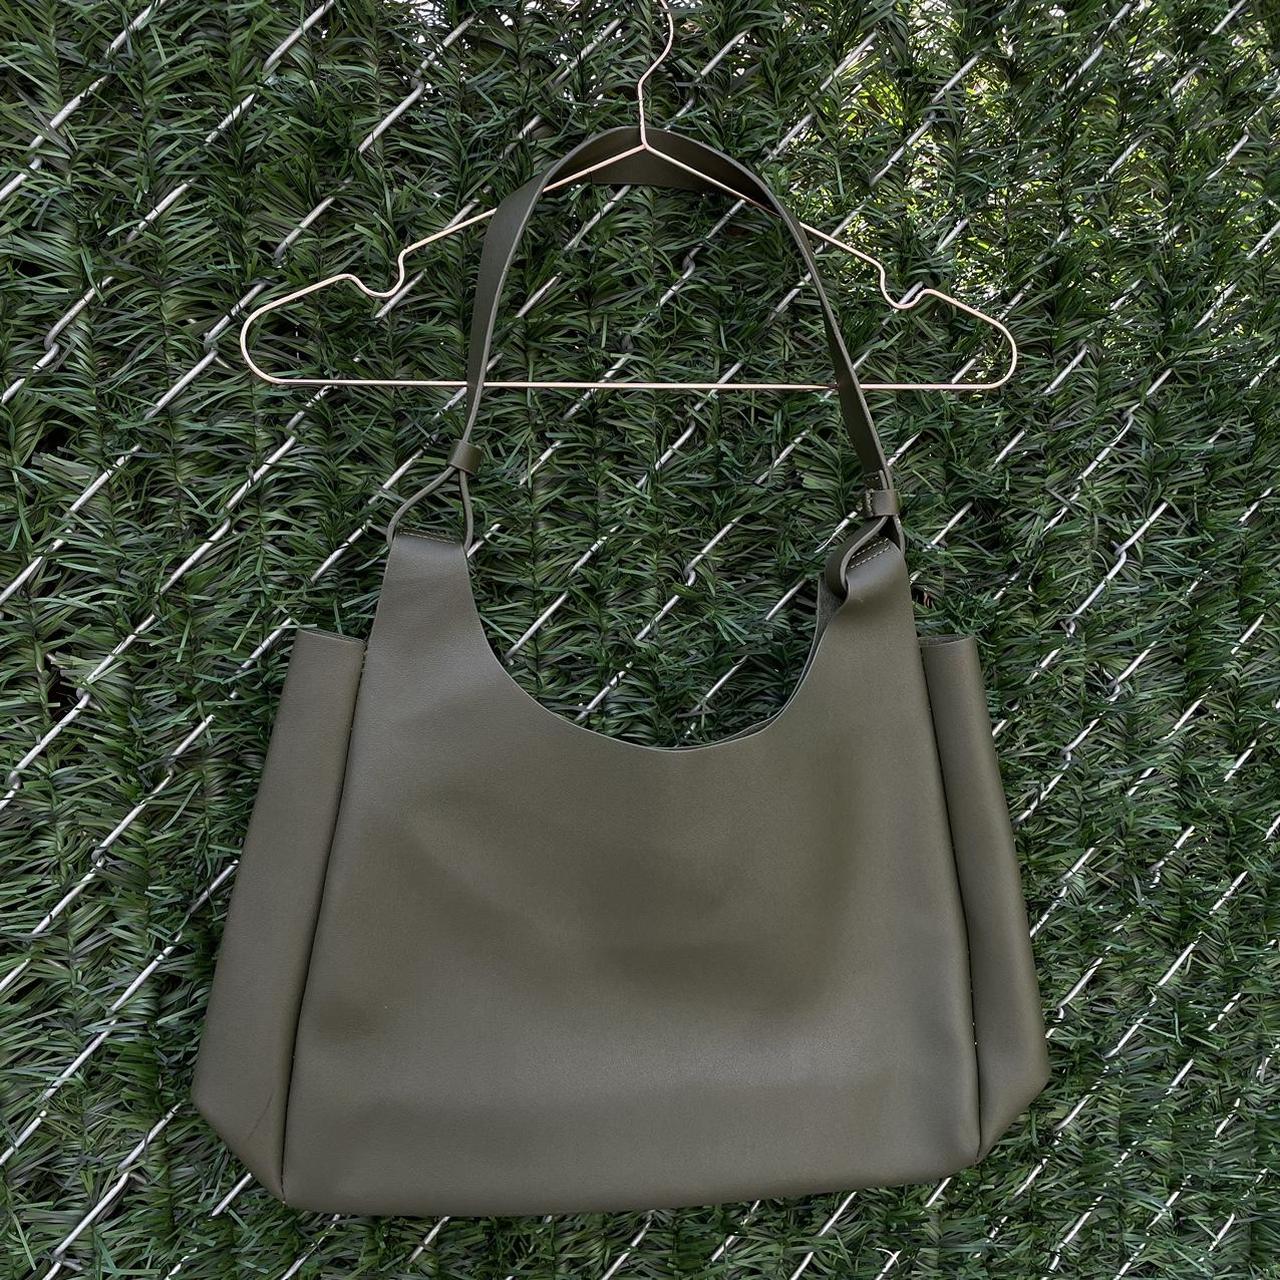 Neiman Marcus, Bags, Neiman Marcus Vegan Leather Olive Green Tote Bag